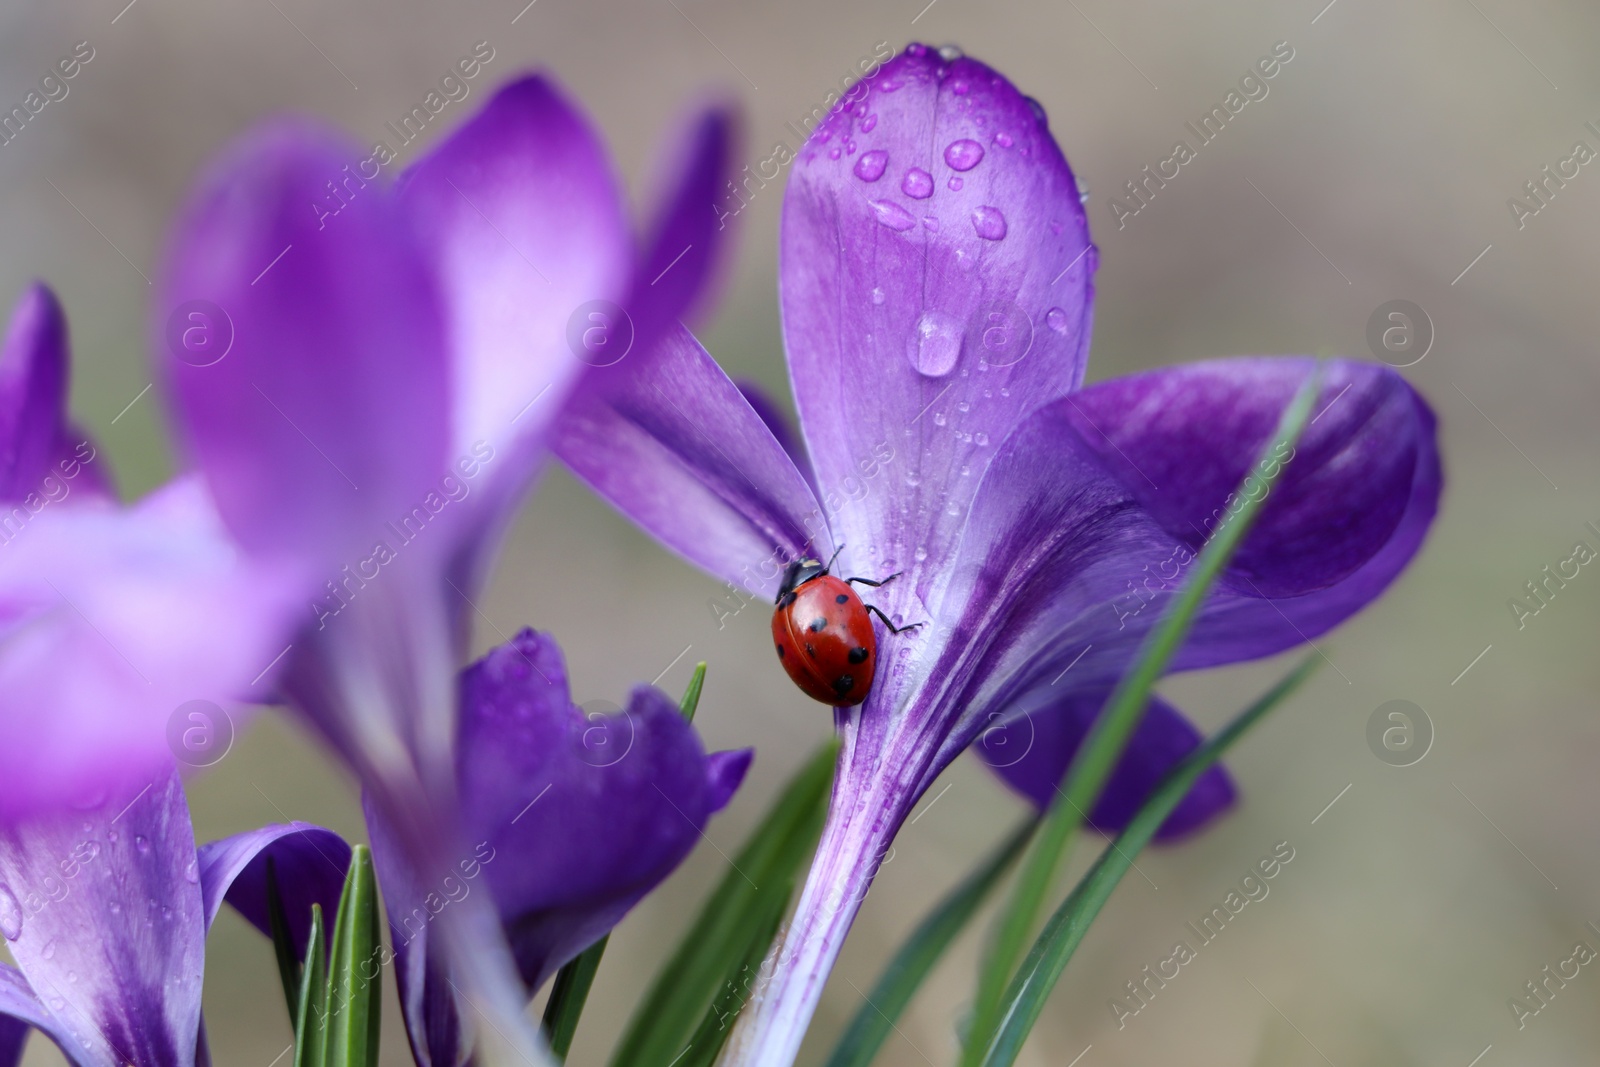 Photo of Ladybug on fresh purple crocus flower growing against blurred background, closeup